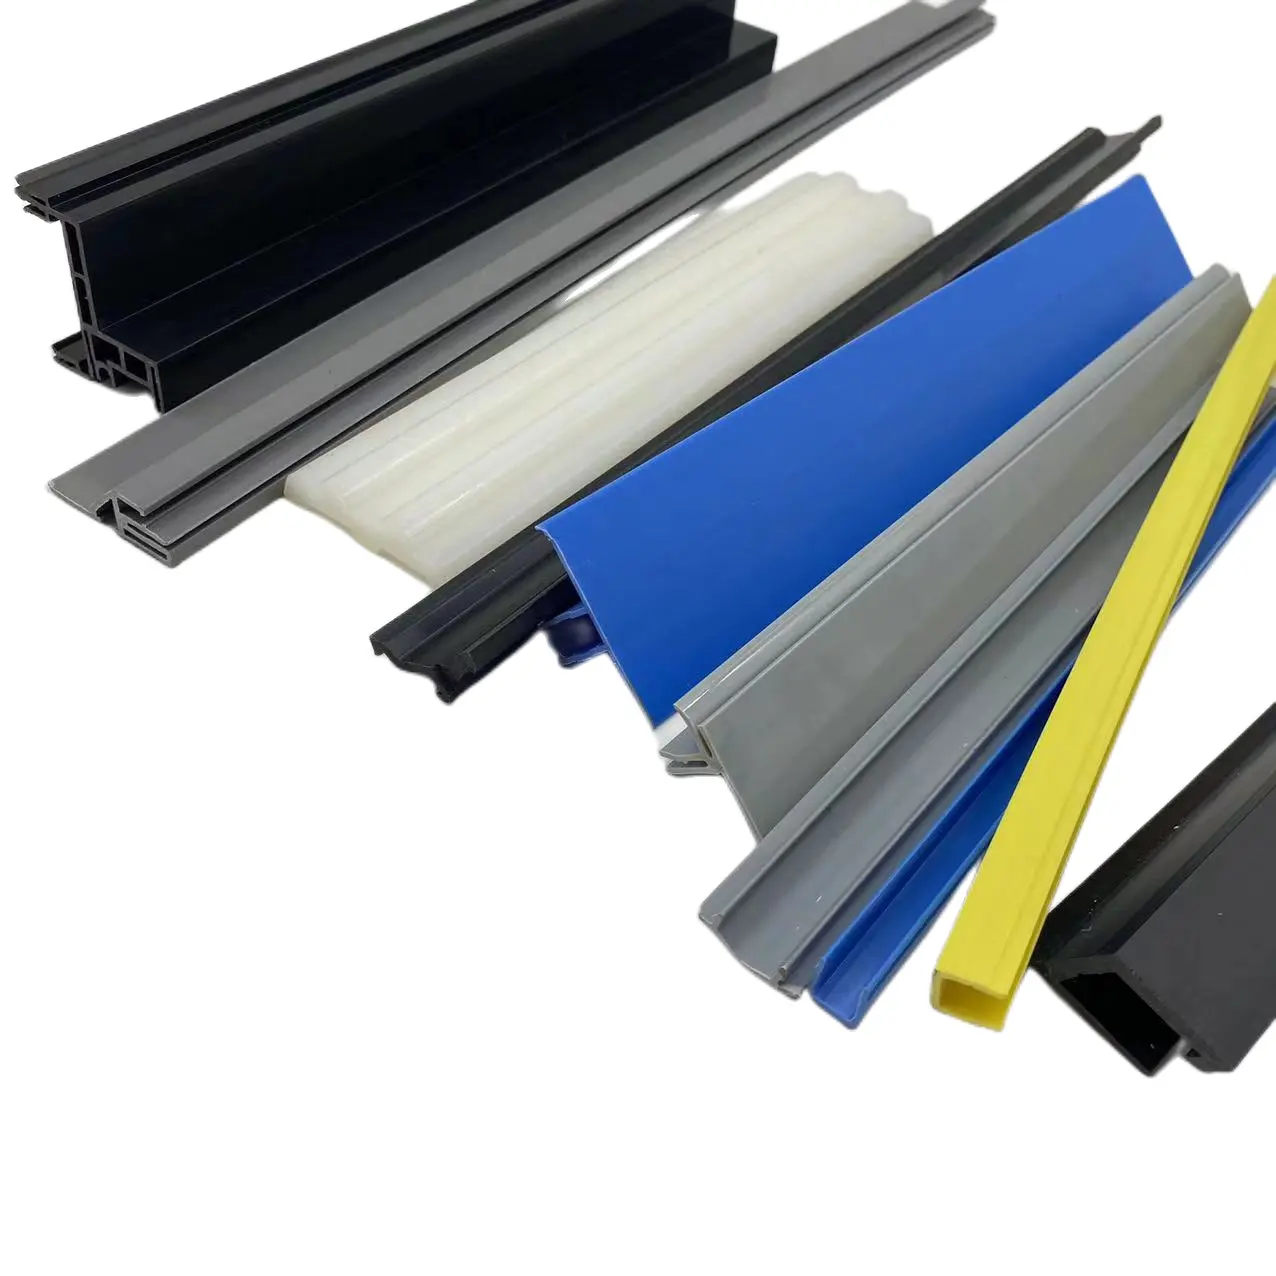 Perfil de plástico de extrusión personalizado, fabricante profesional, PVC/ABS/PC/PP